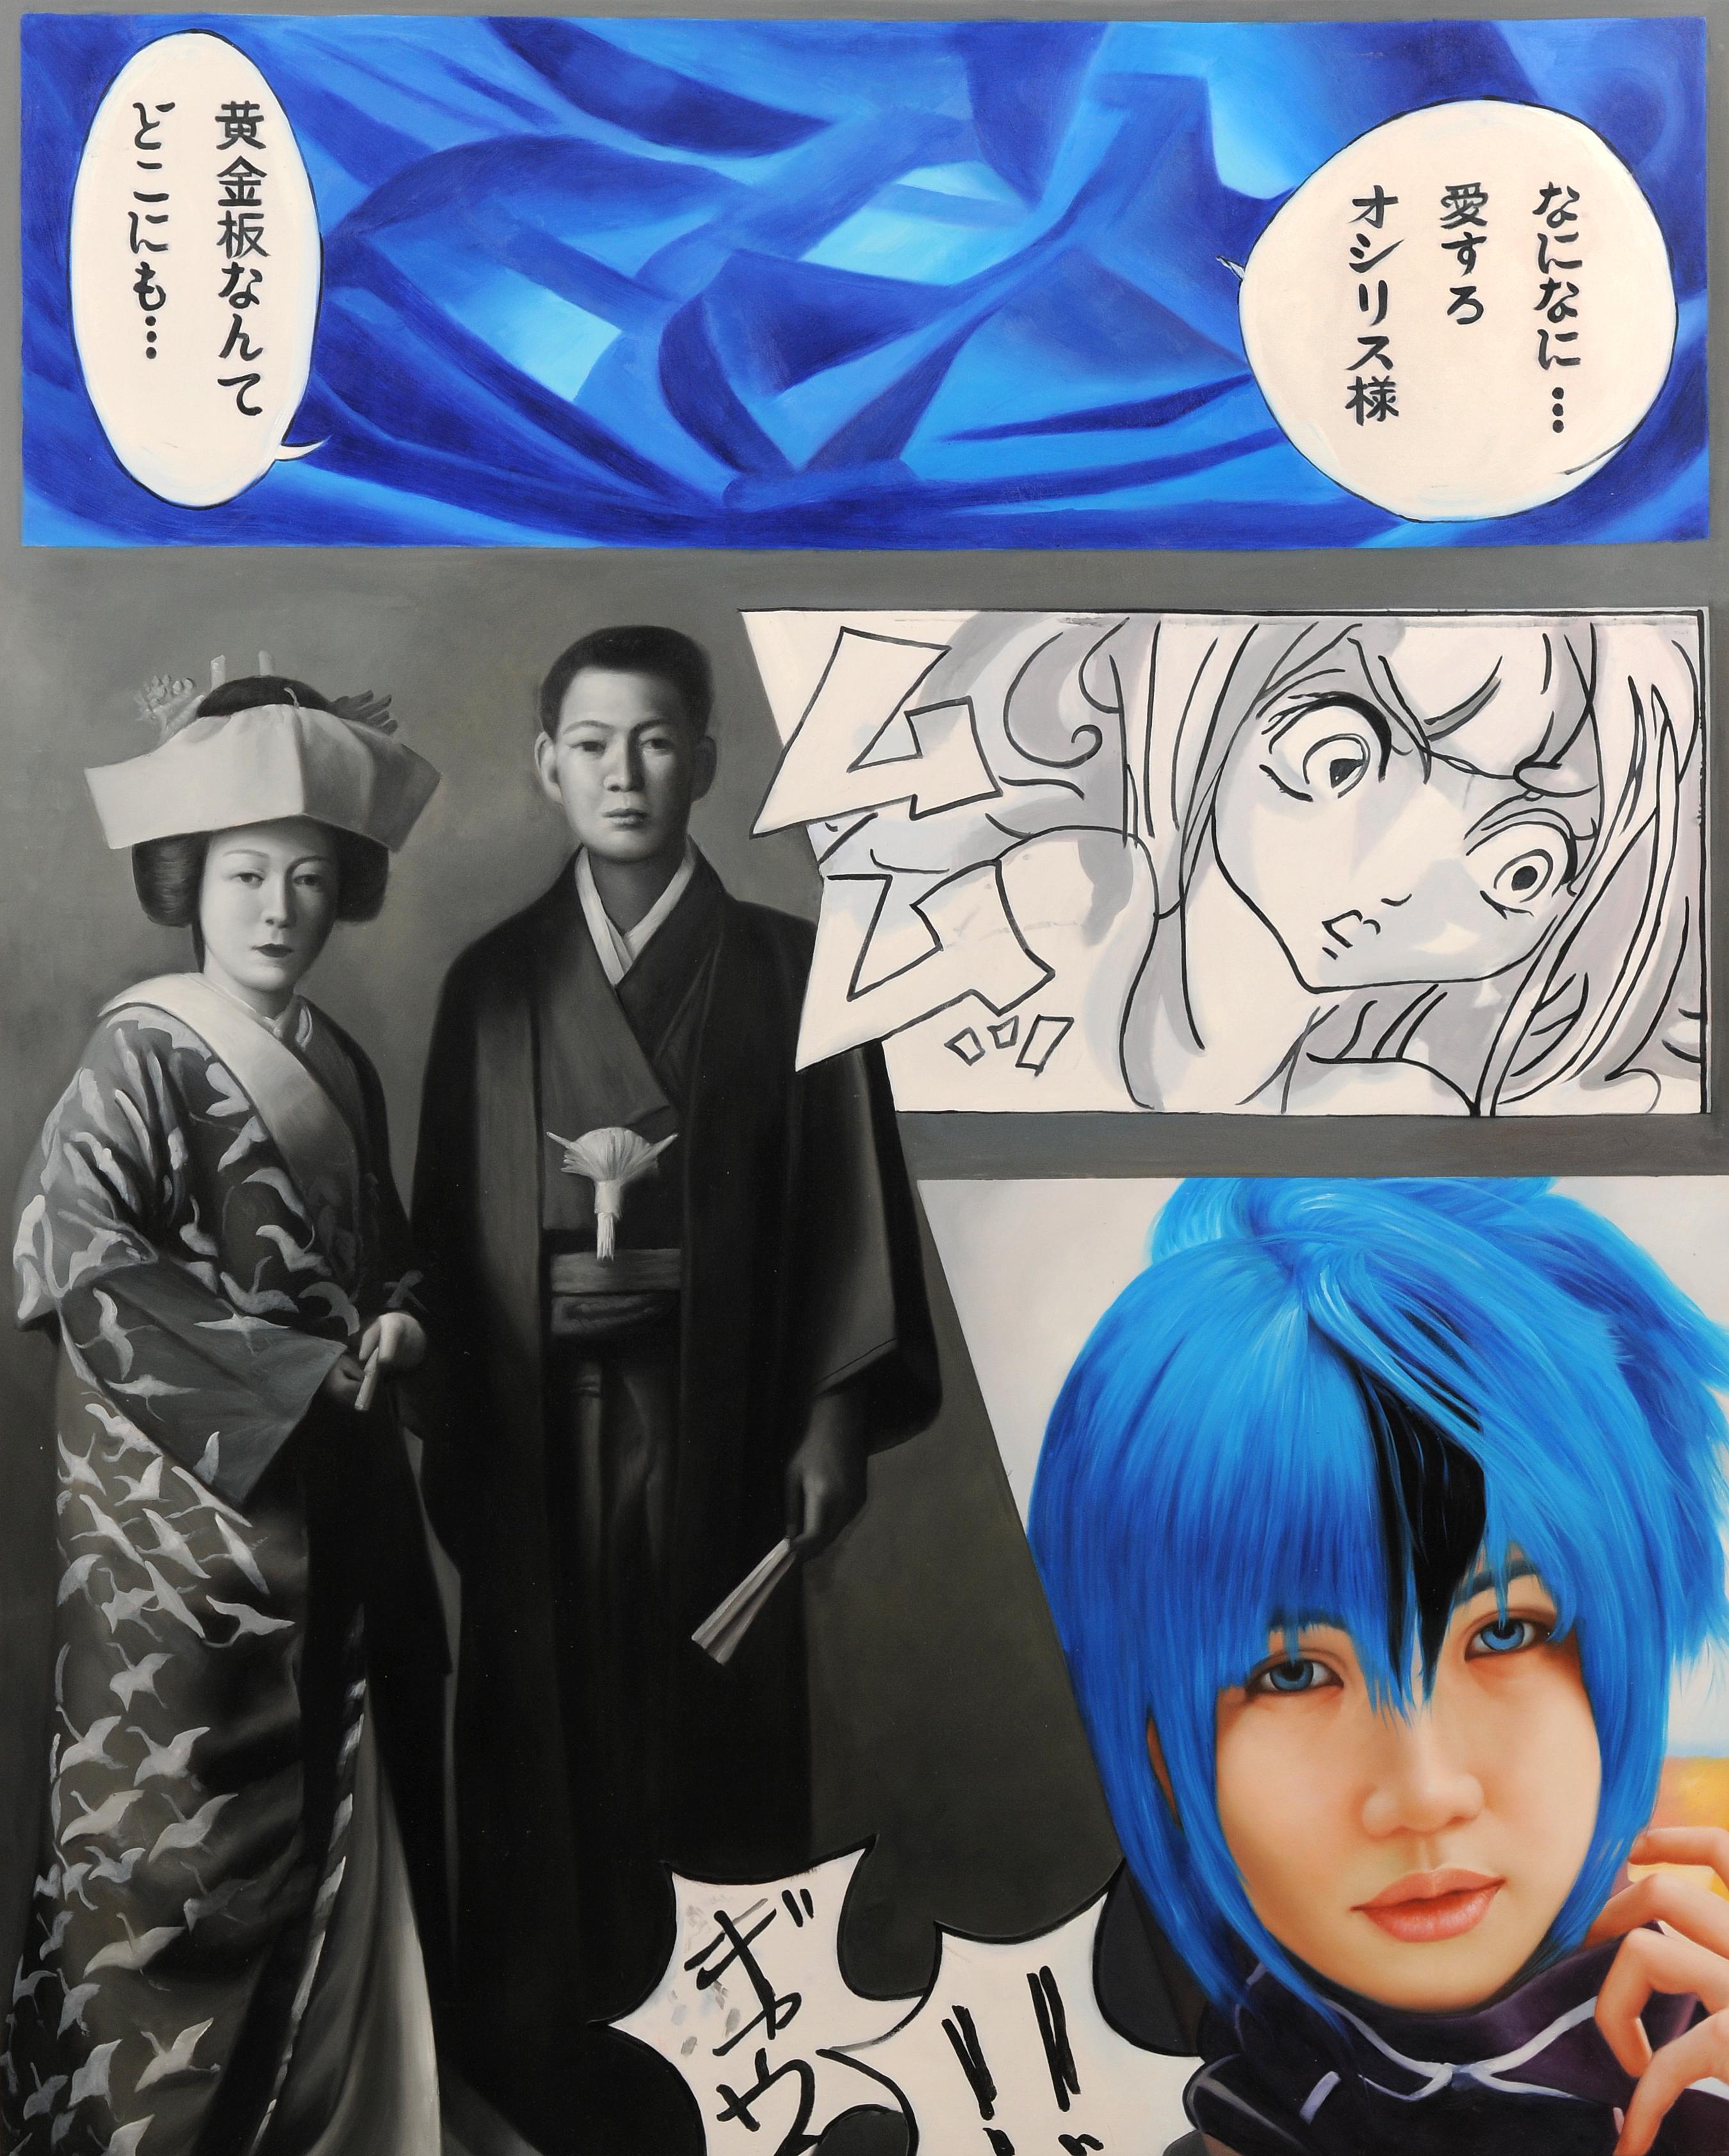 Deep Blu : Azure Reflections, Tokyo's Depths in Manga Palette - Painting by JIMMY YOSHIMURA